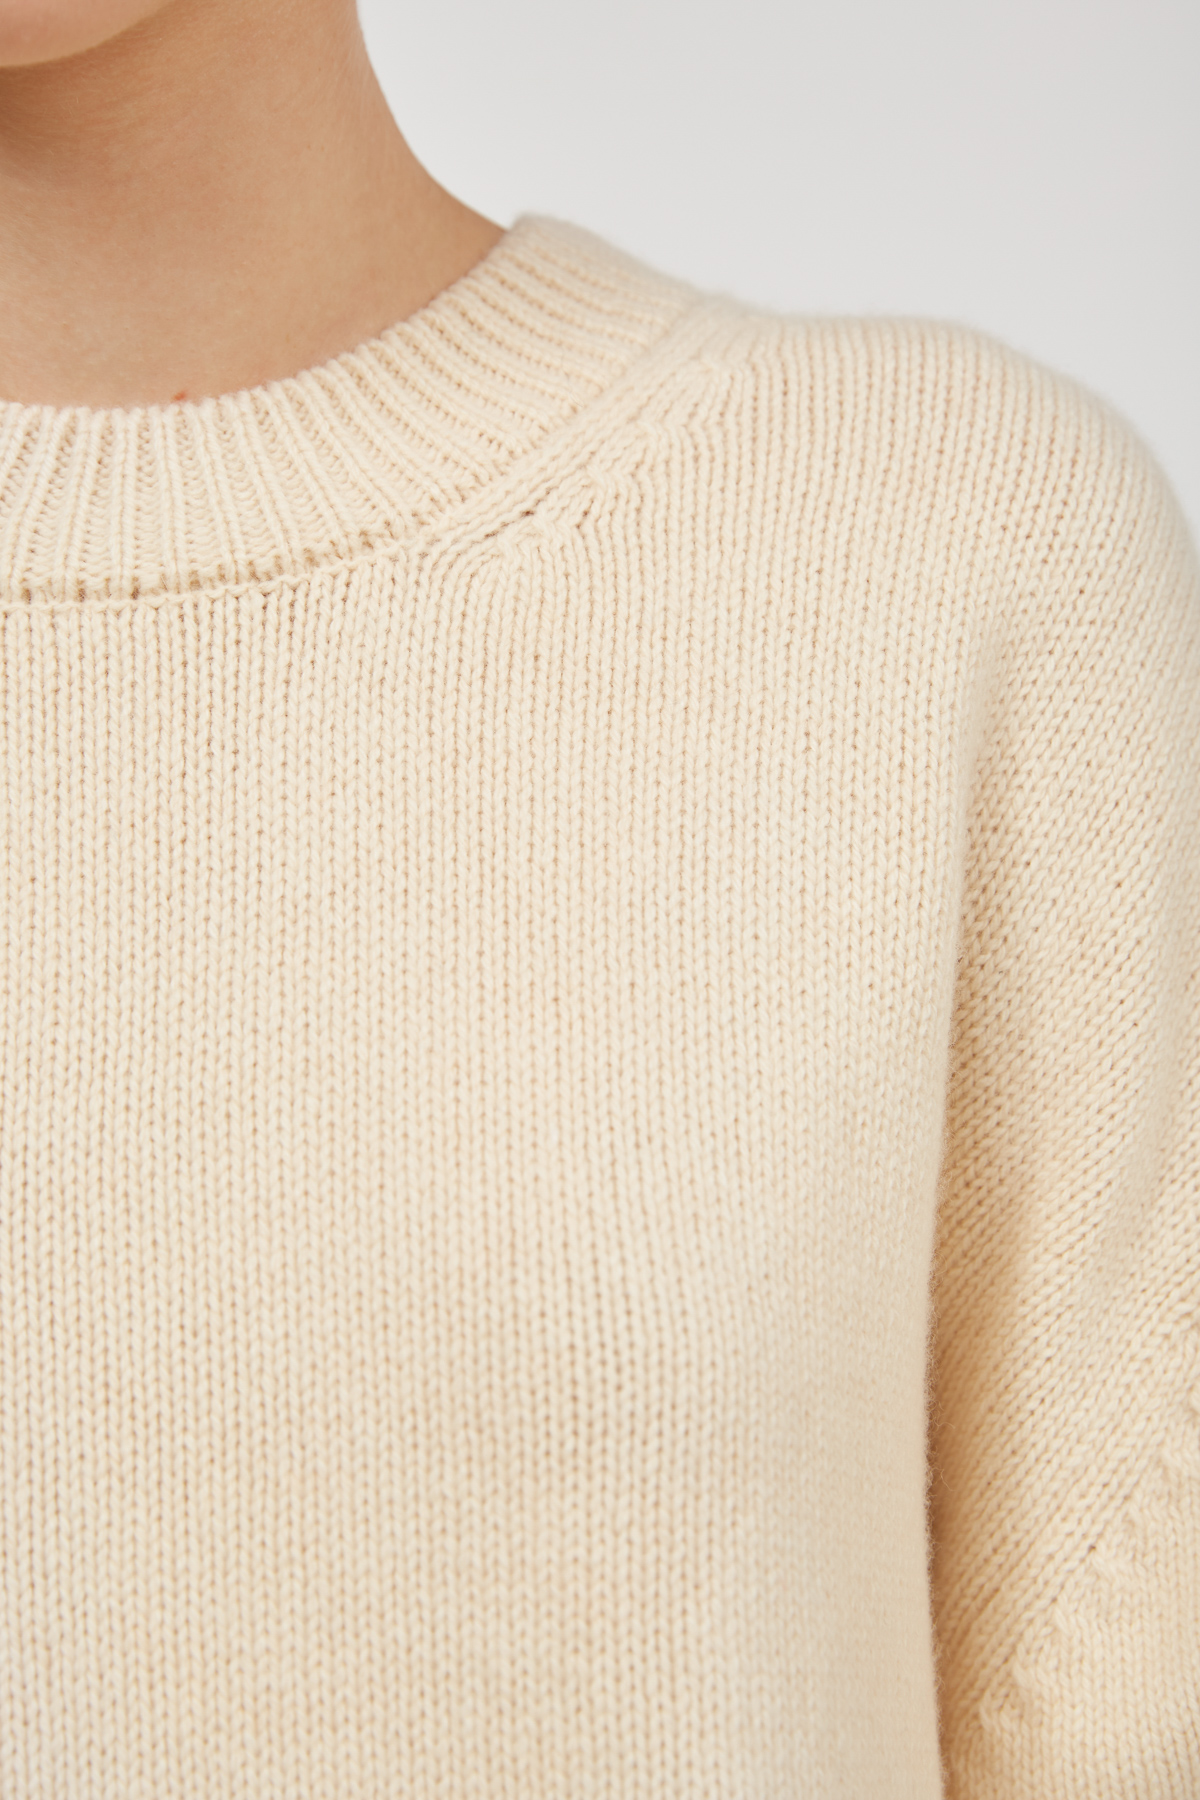 Milky cashmere sweater, photo 4